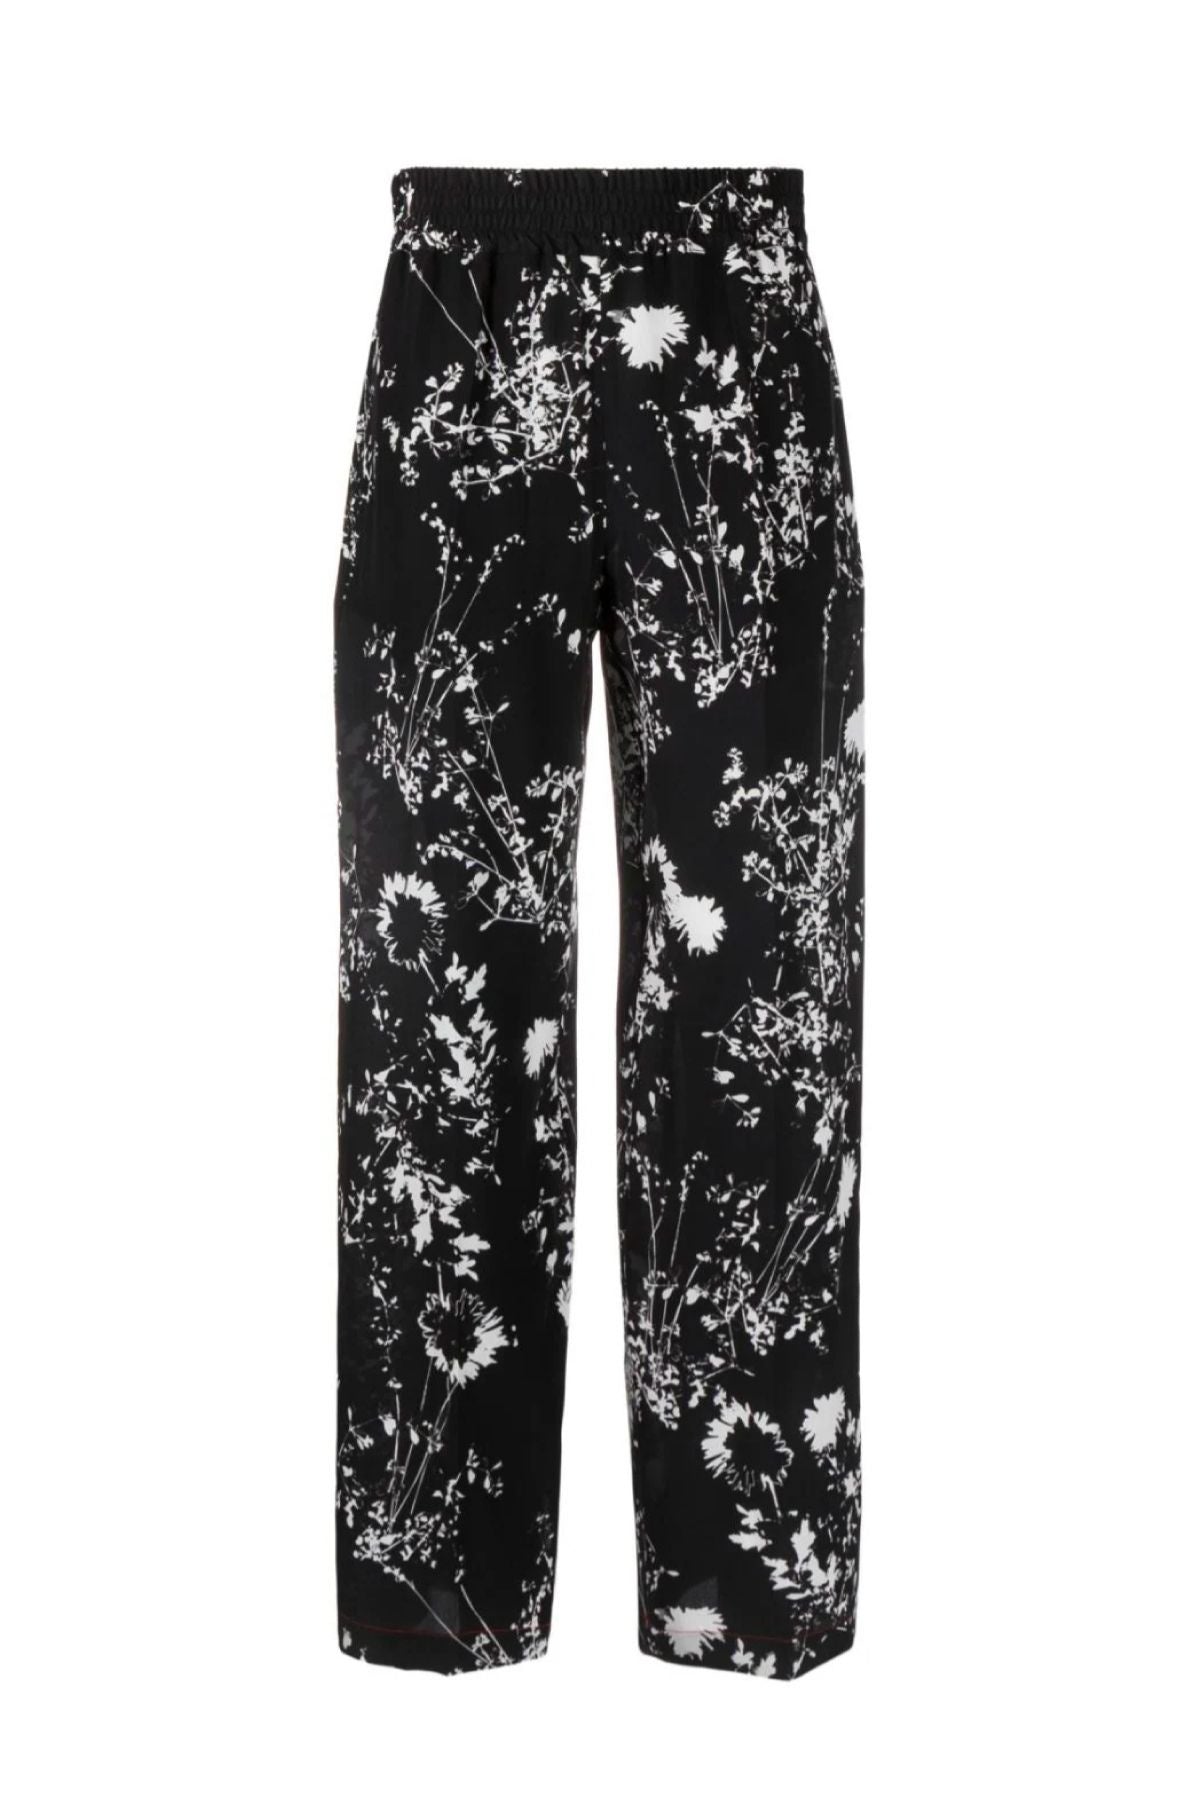 Victoria Beckham Pyjama Trouser - Floral Negative